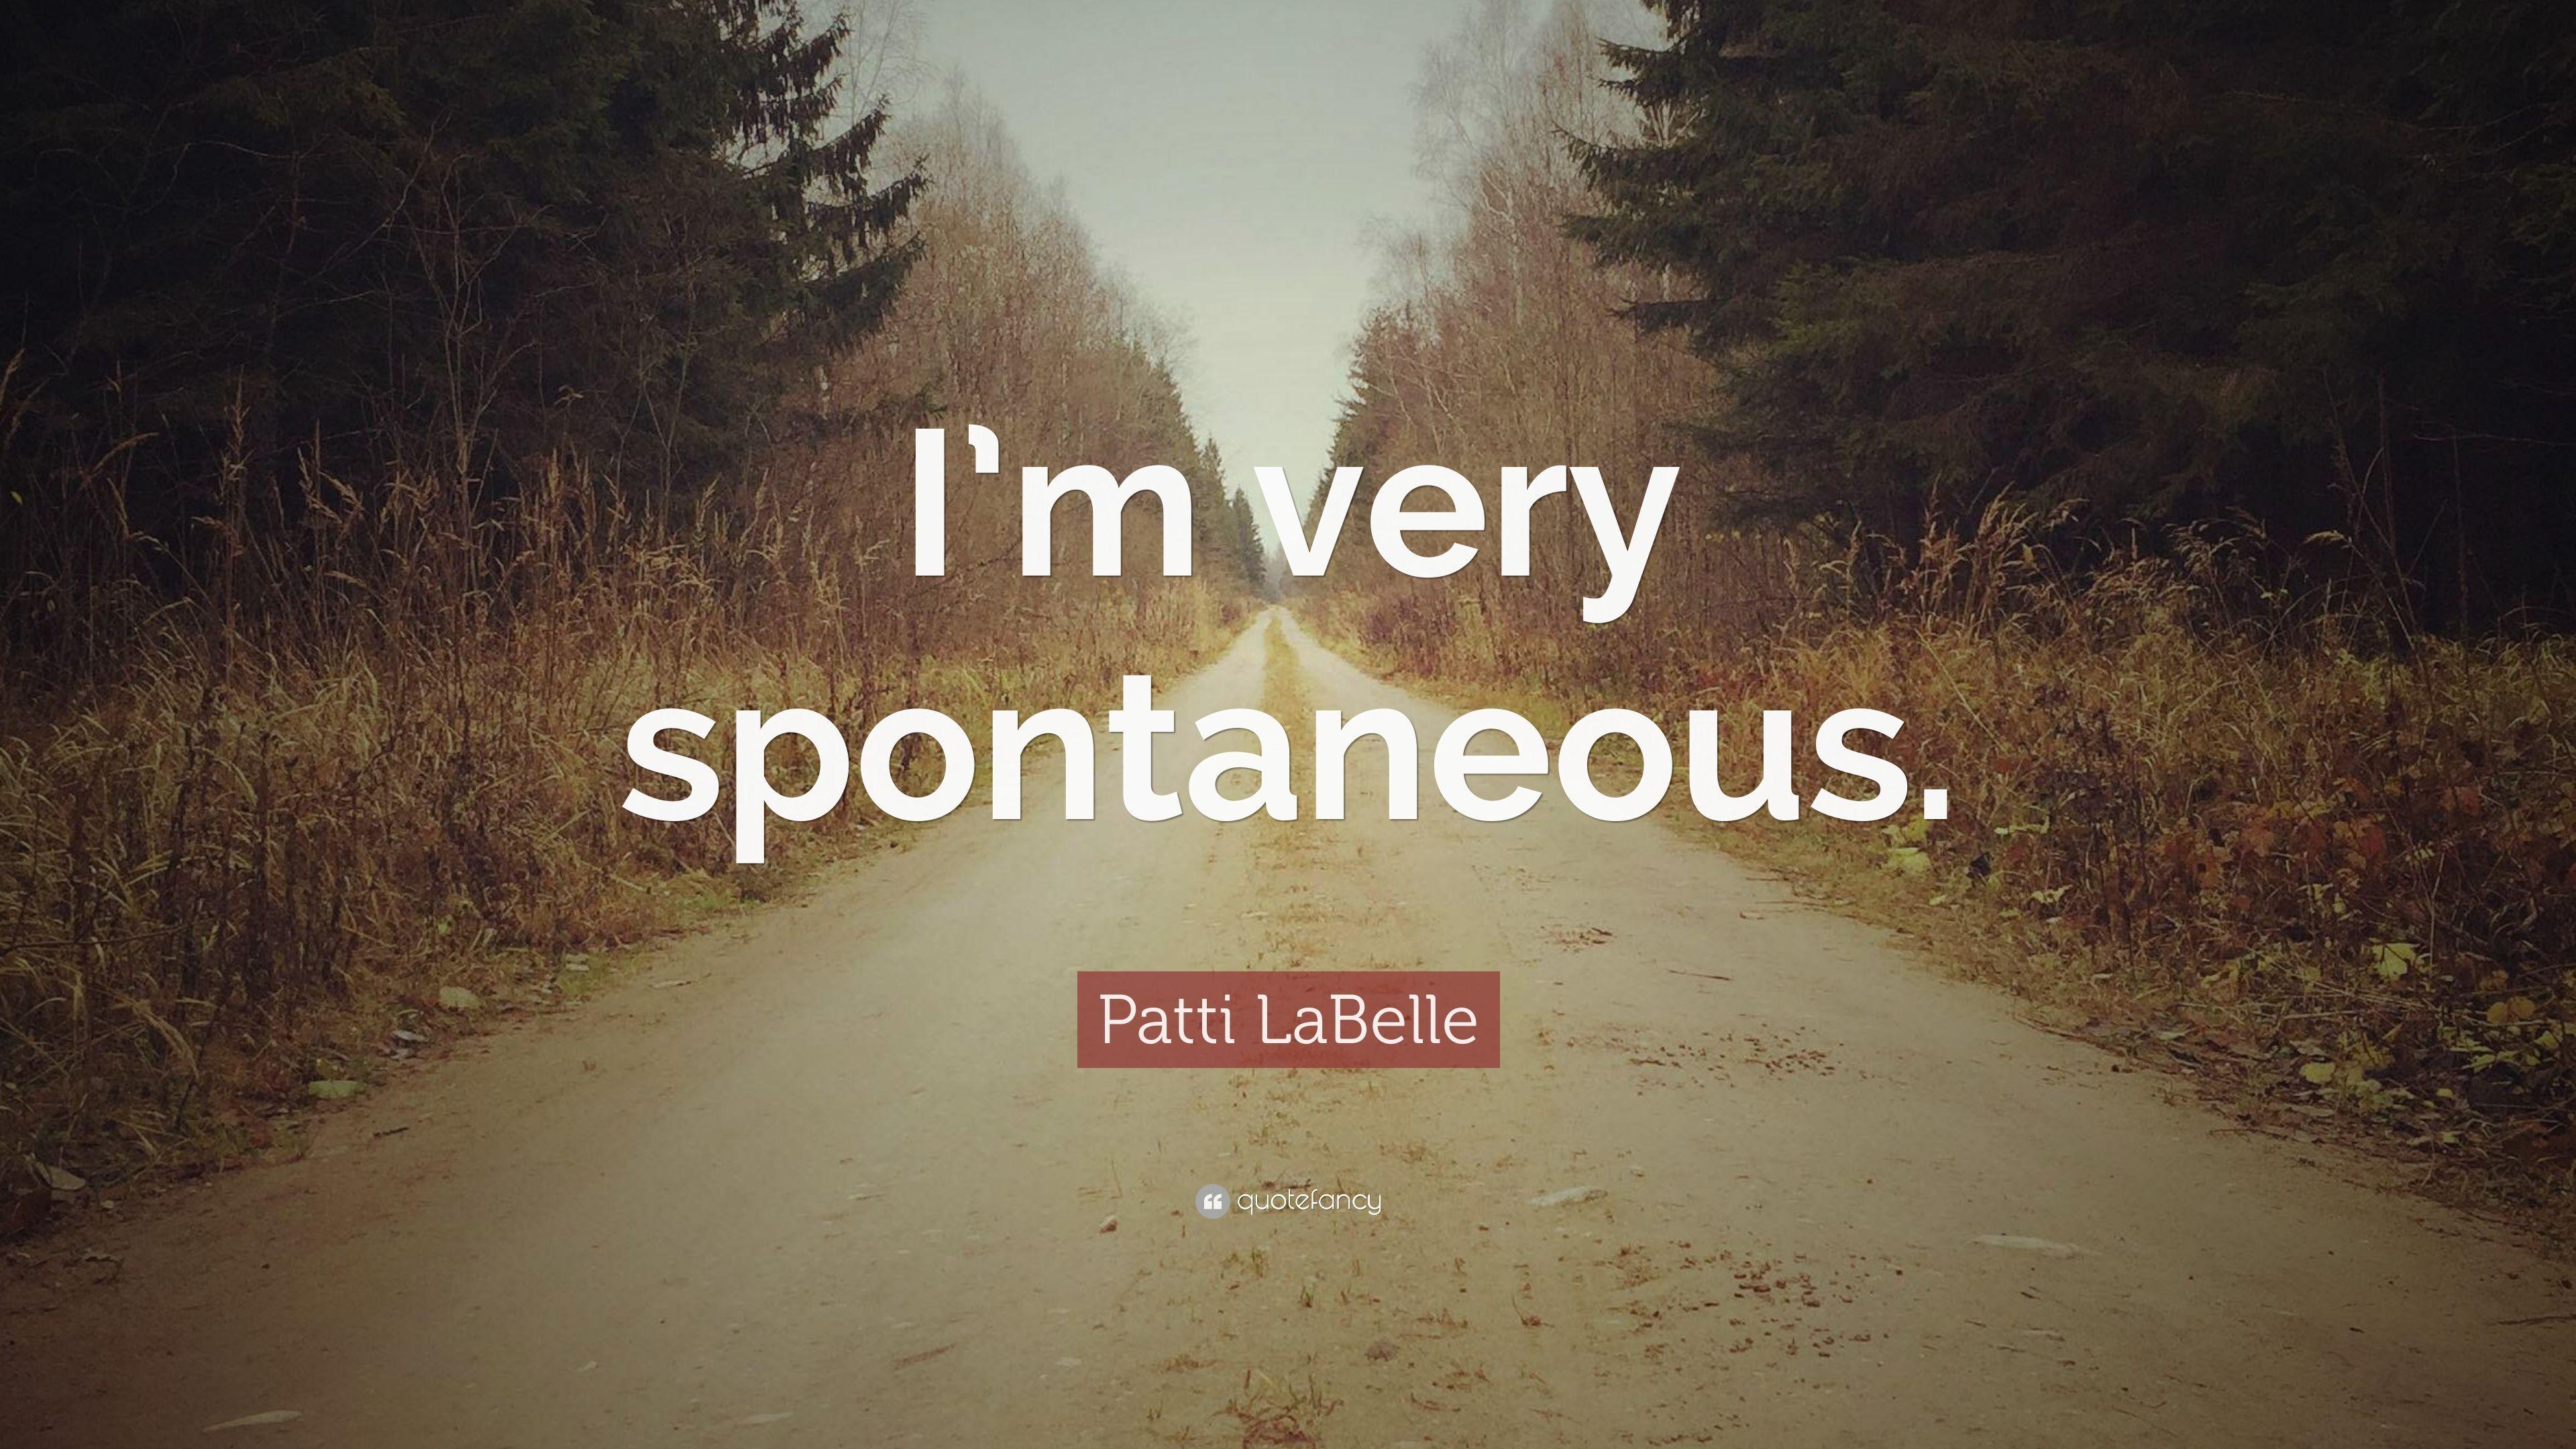 Patti LaBelle Quote: “I'm very spontaneous.” (7 wallpaper)